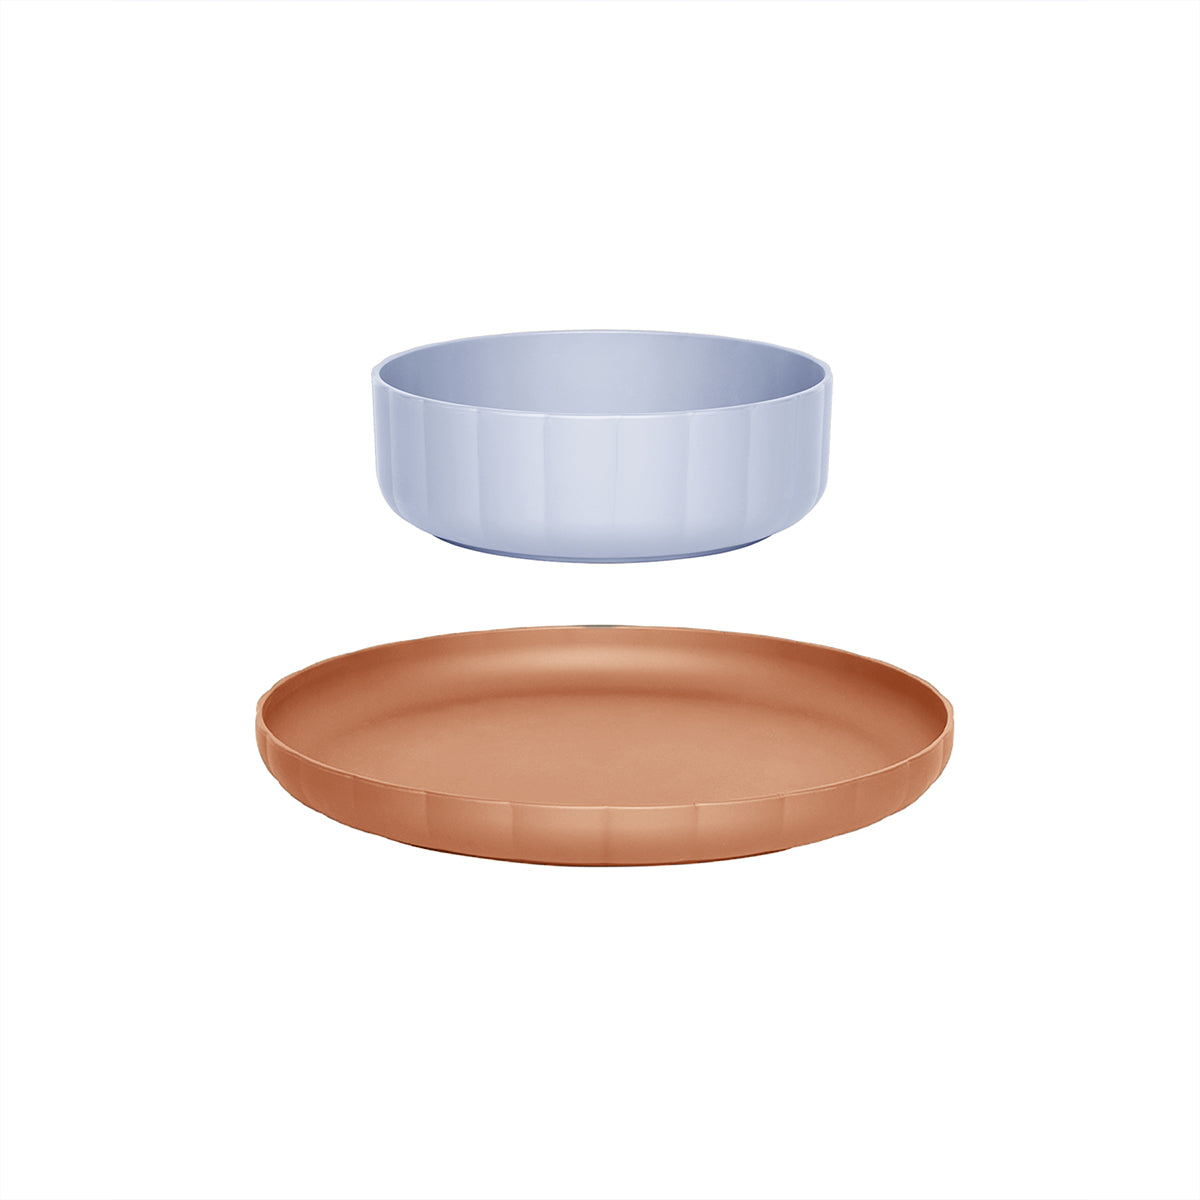 OYOY MINI Pullo Plate & Bowl - Set of 2 Dining Ware 307 Caramel / Ice Blue